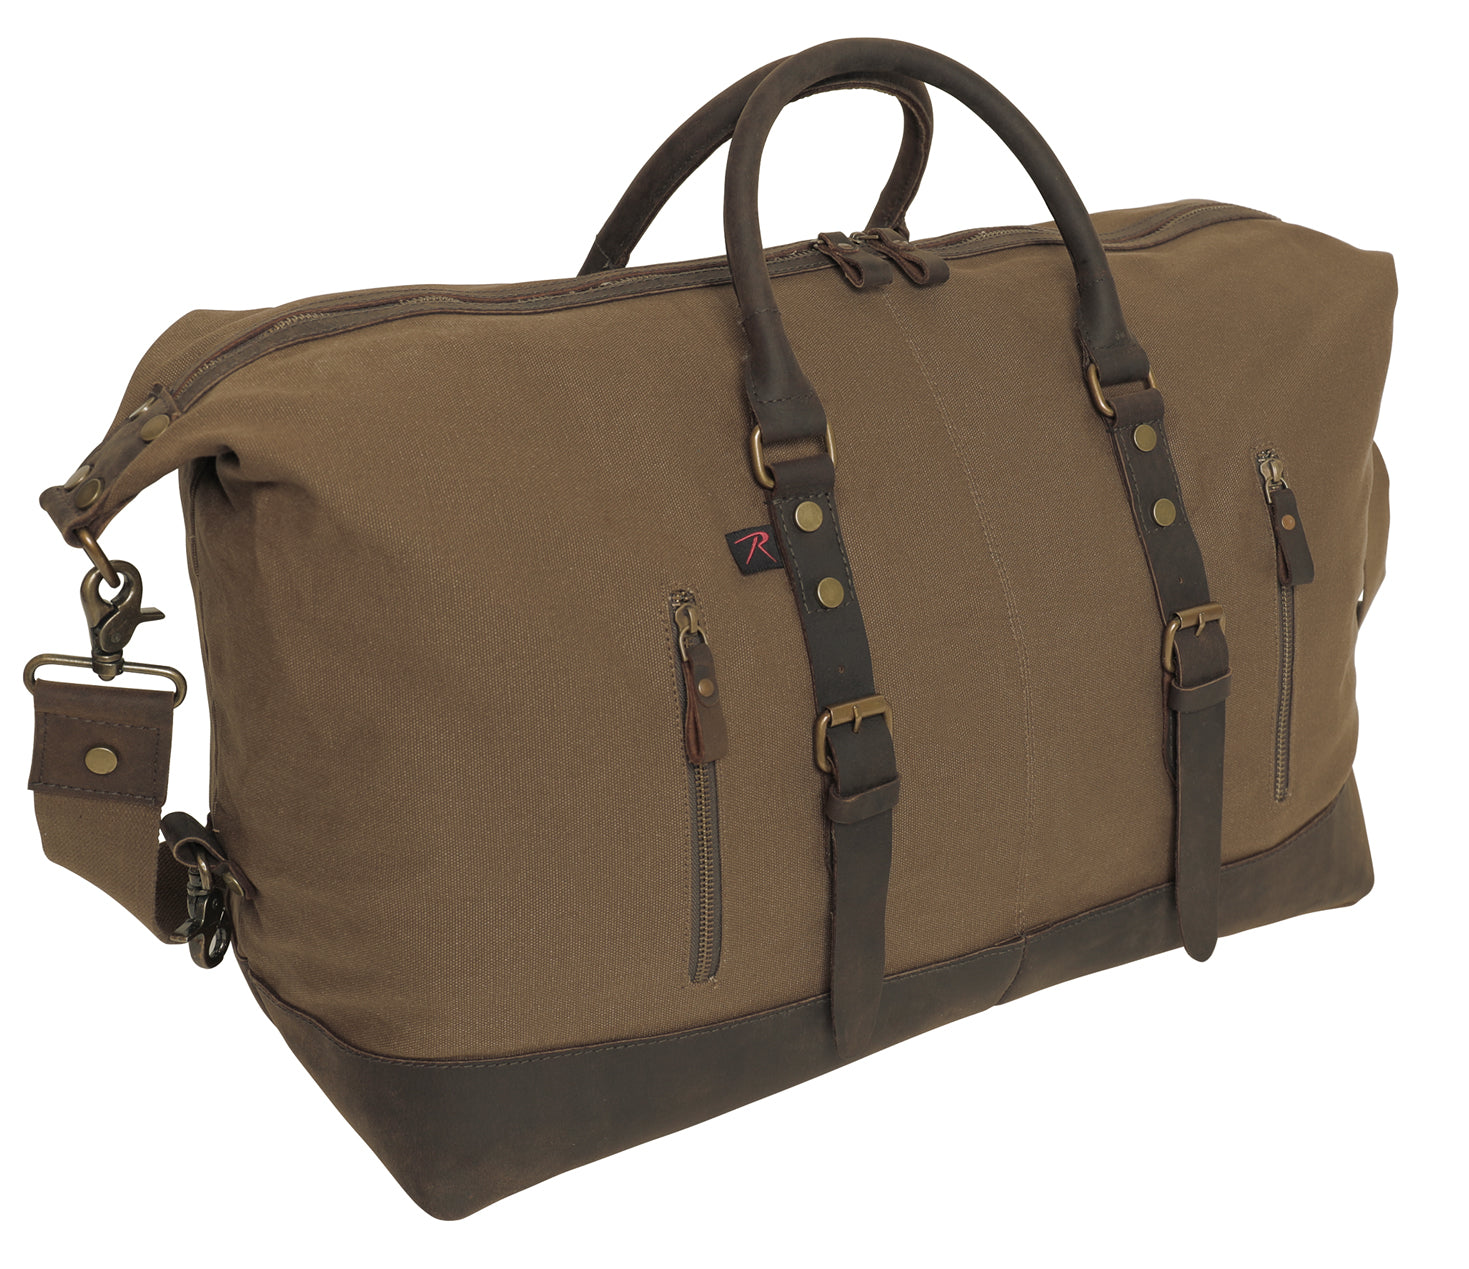 Milspec Extended Weekender Bag New Arrivals MilTac Tactical Military Outdoor Gear Australia